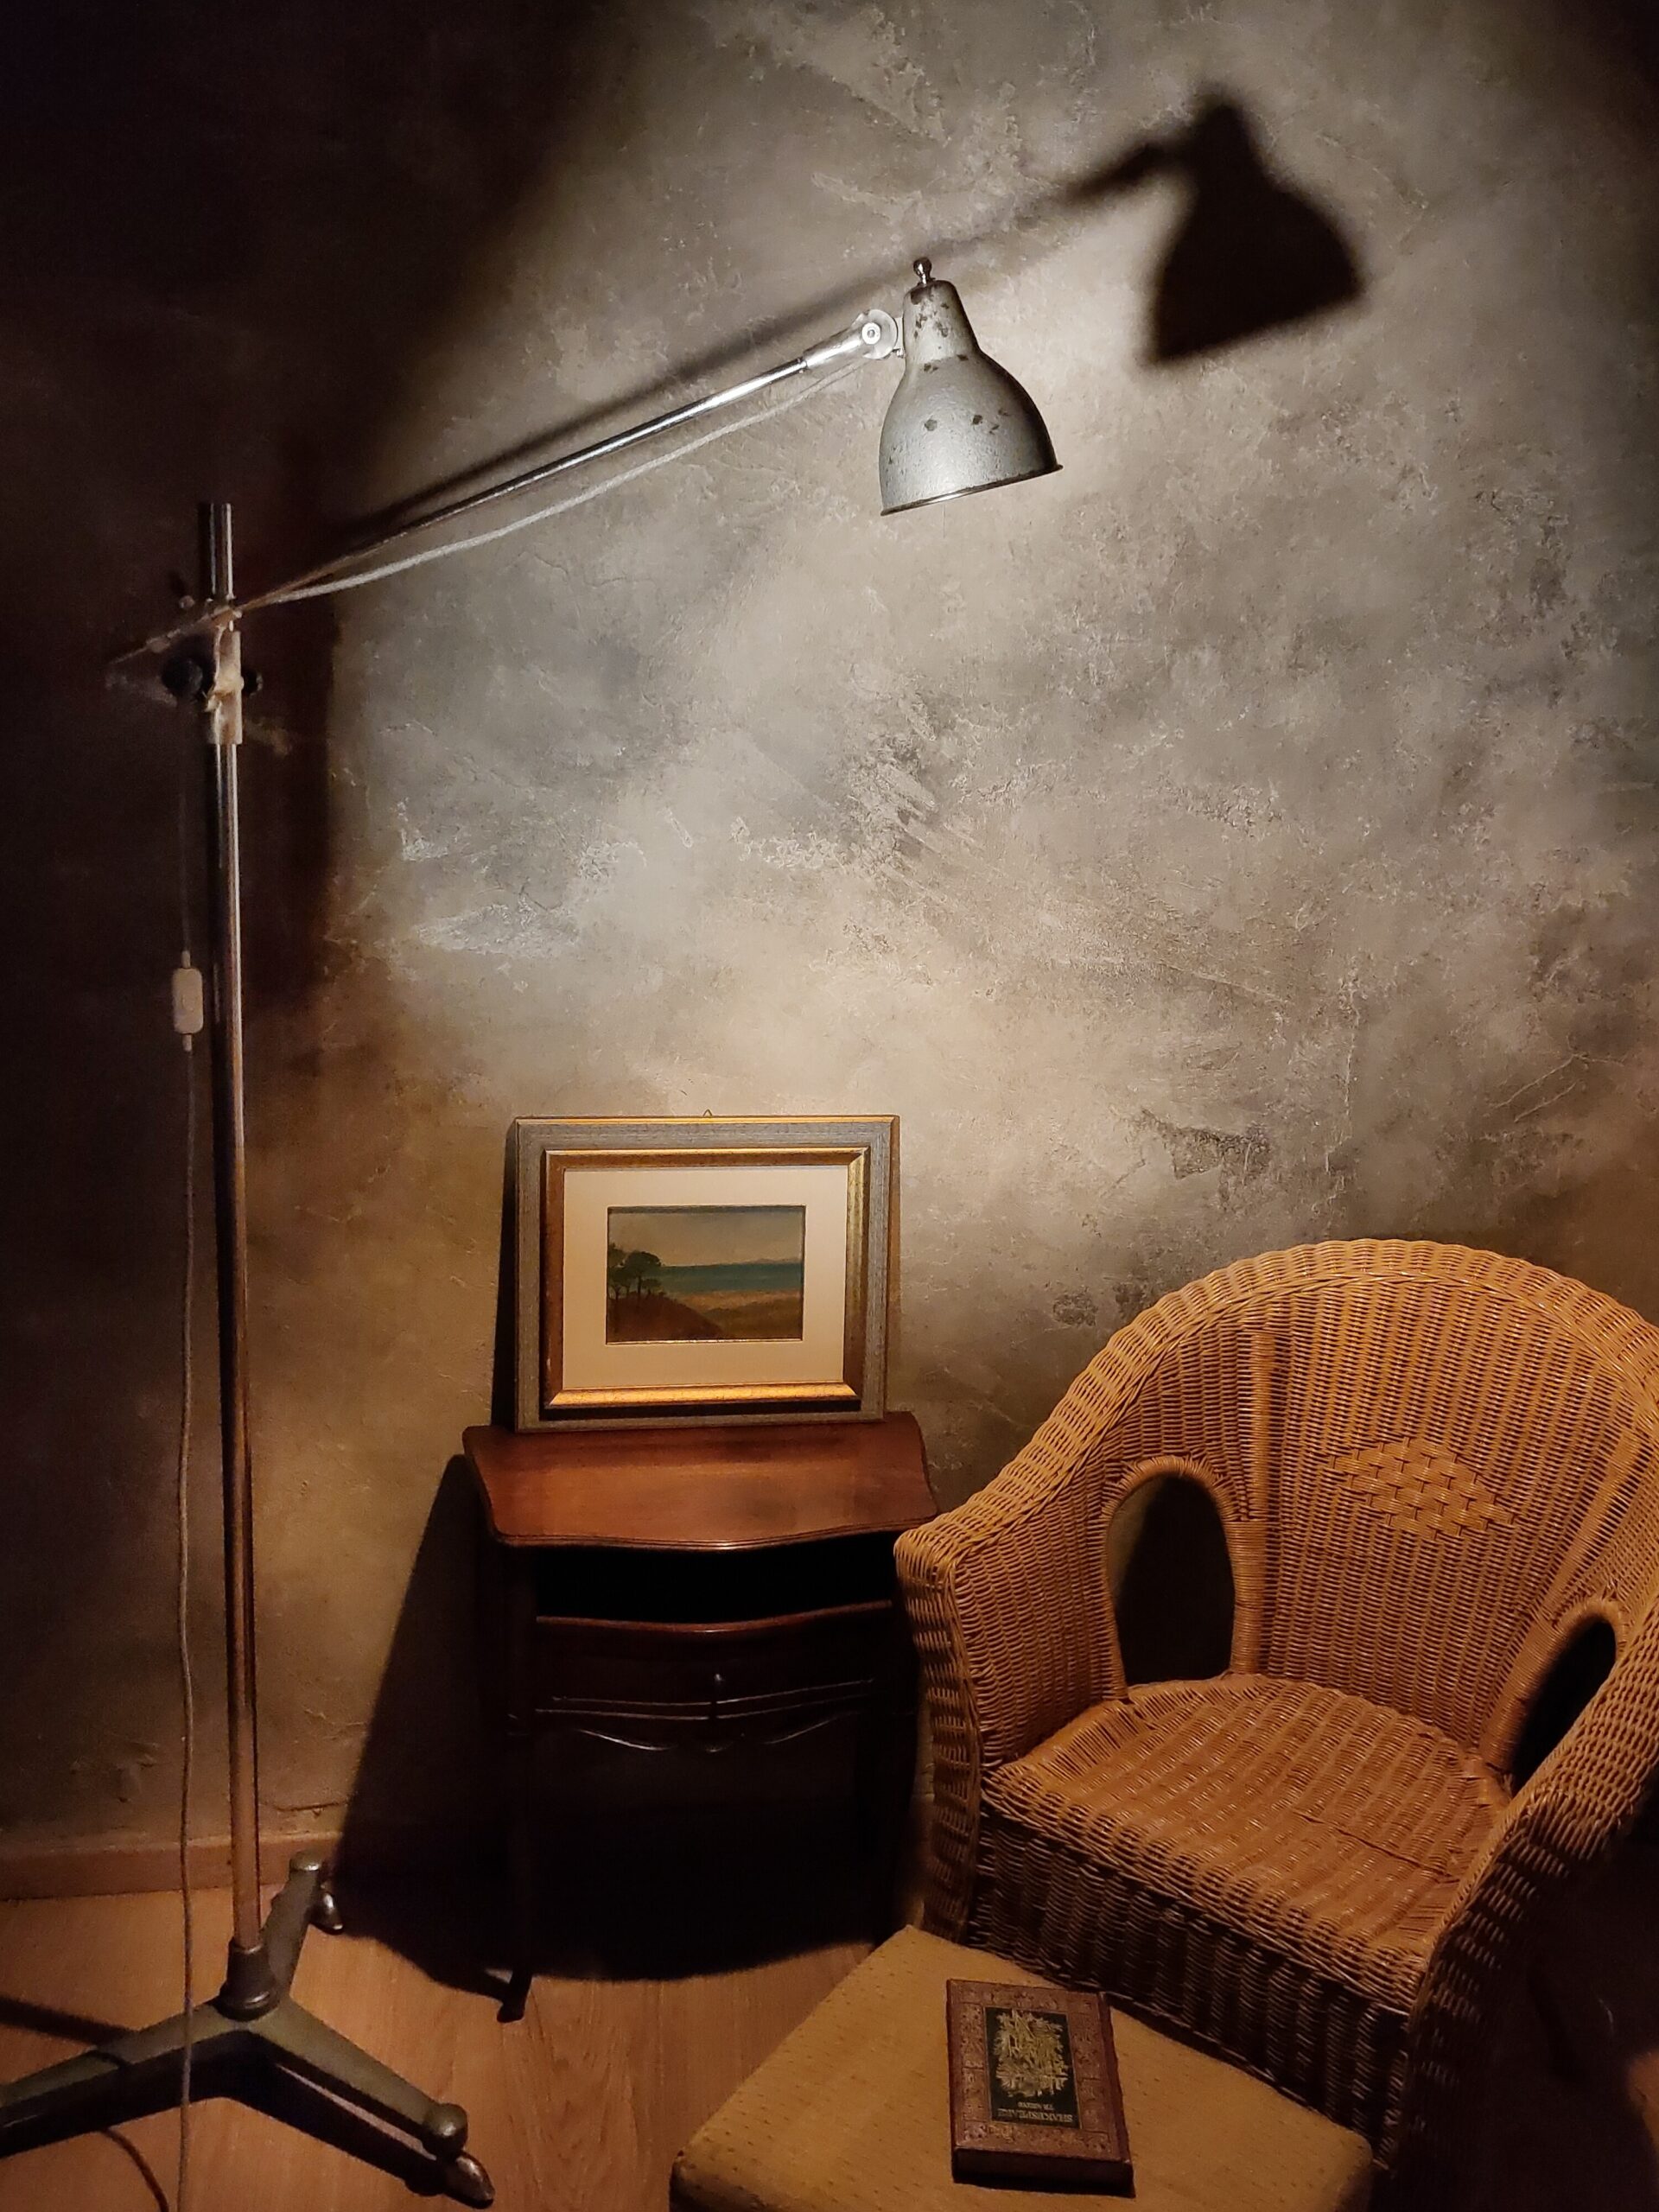 Treppiede, lampada da studio fotografico vintage